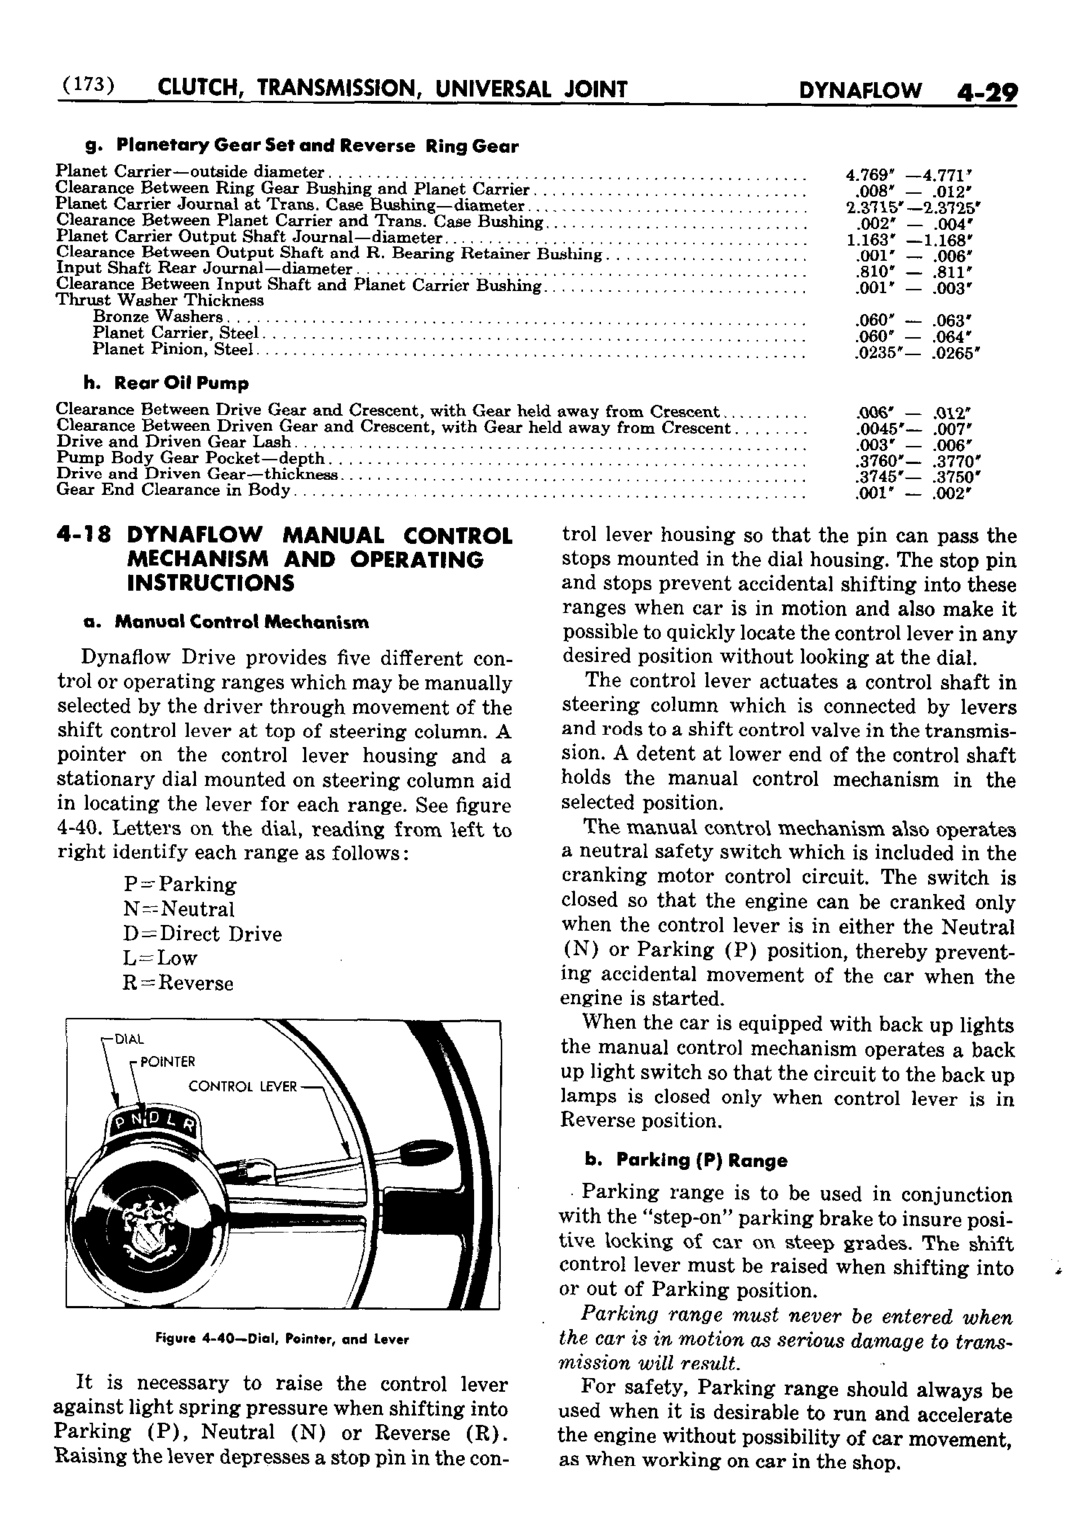 n_05 1952 Buick Shop Manual - Transmission-029-029.jpg